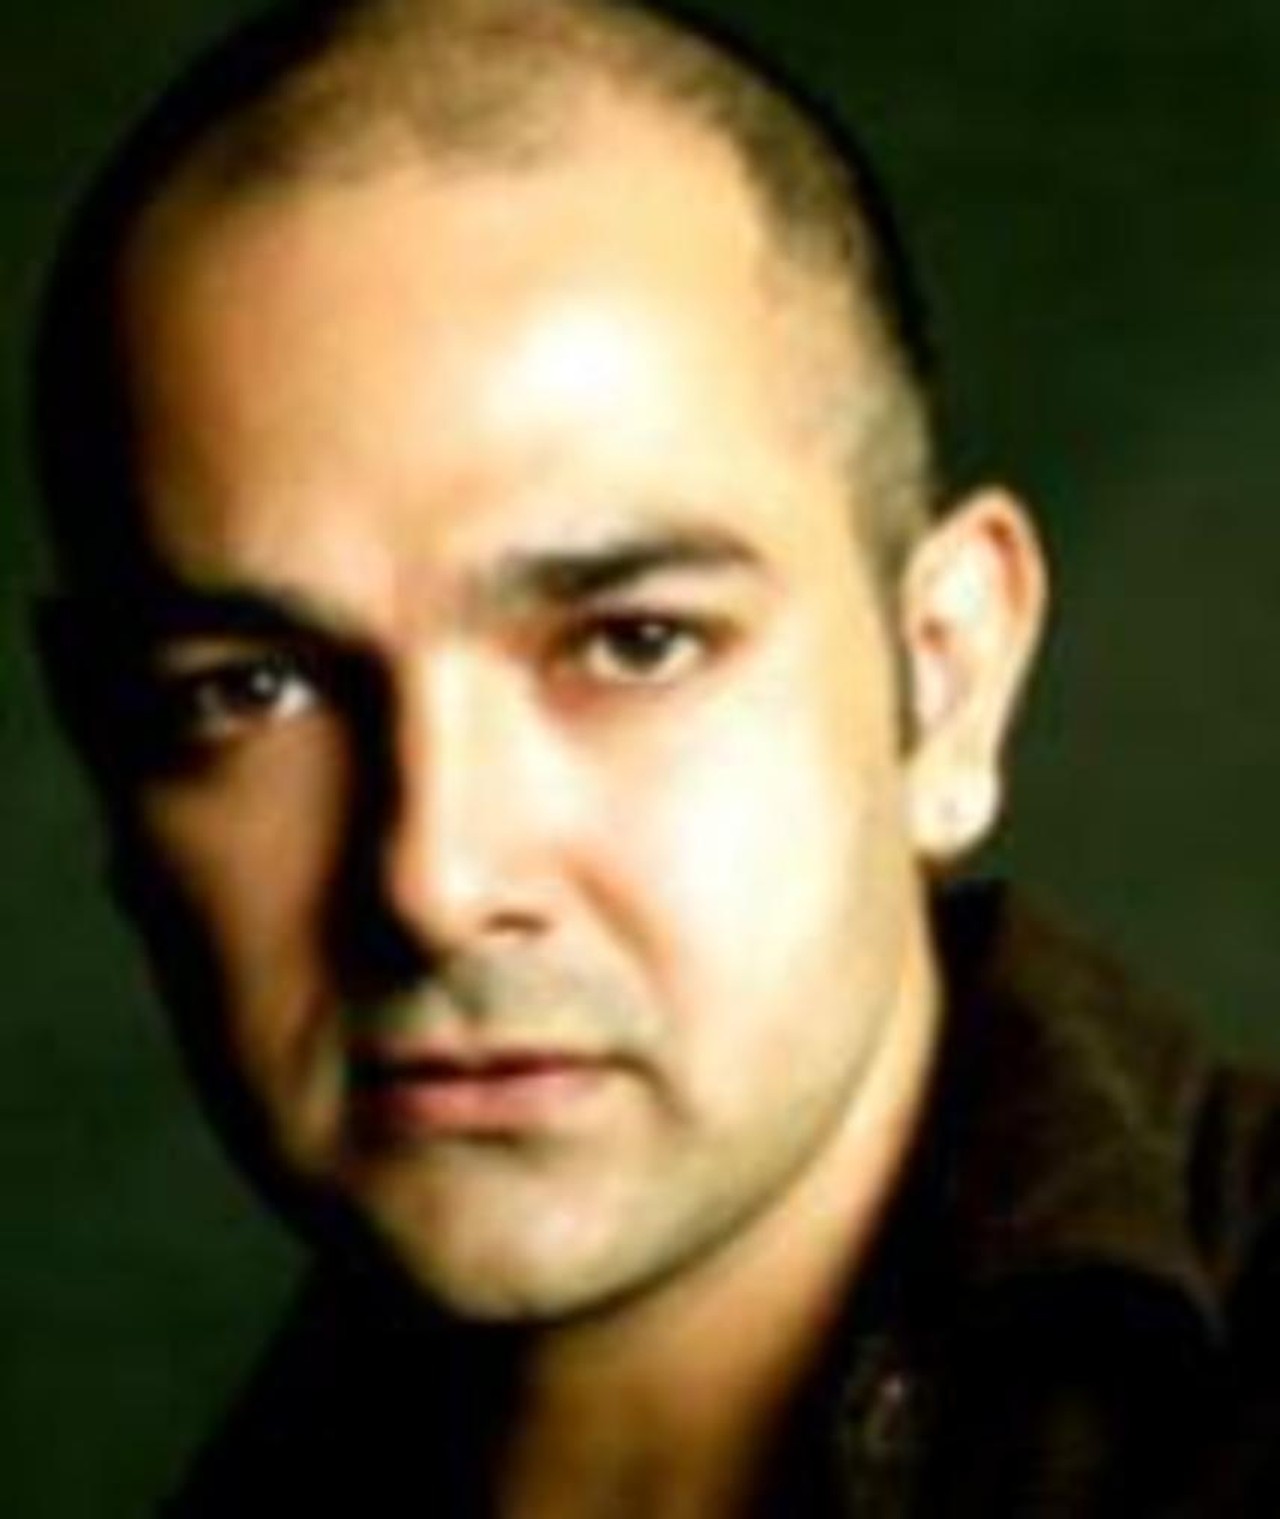 Aamir Khan's haircut session to get the 'Ghajini' look - Bollywood Hungama